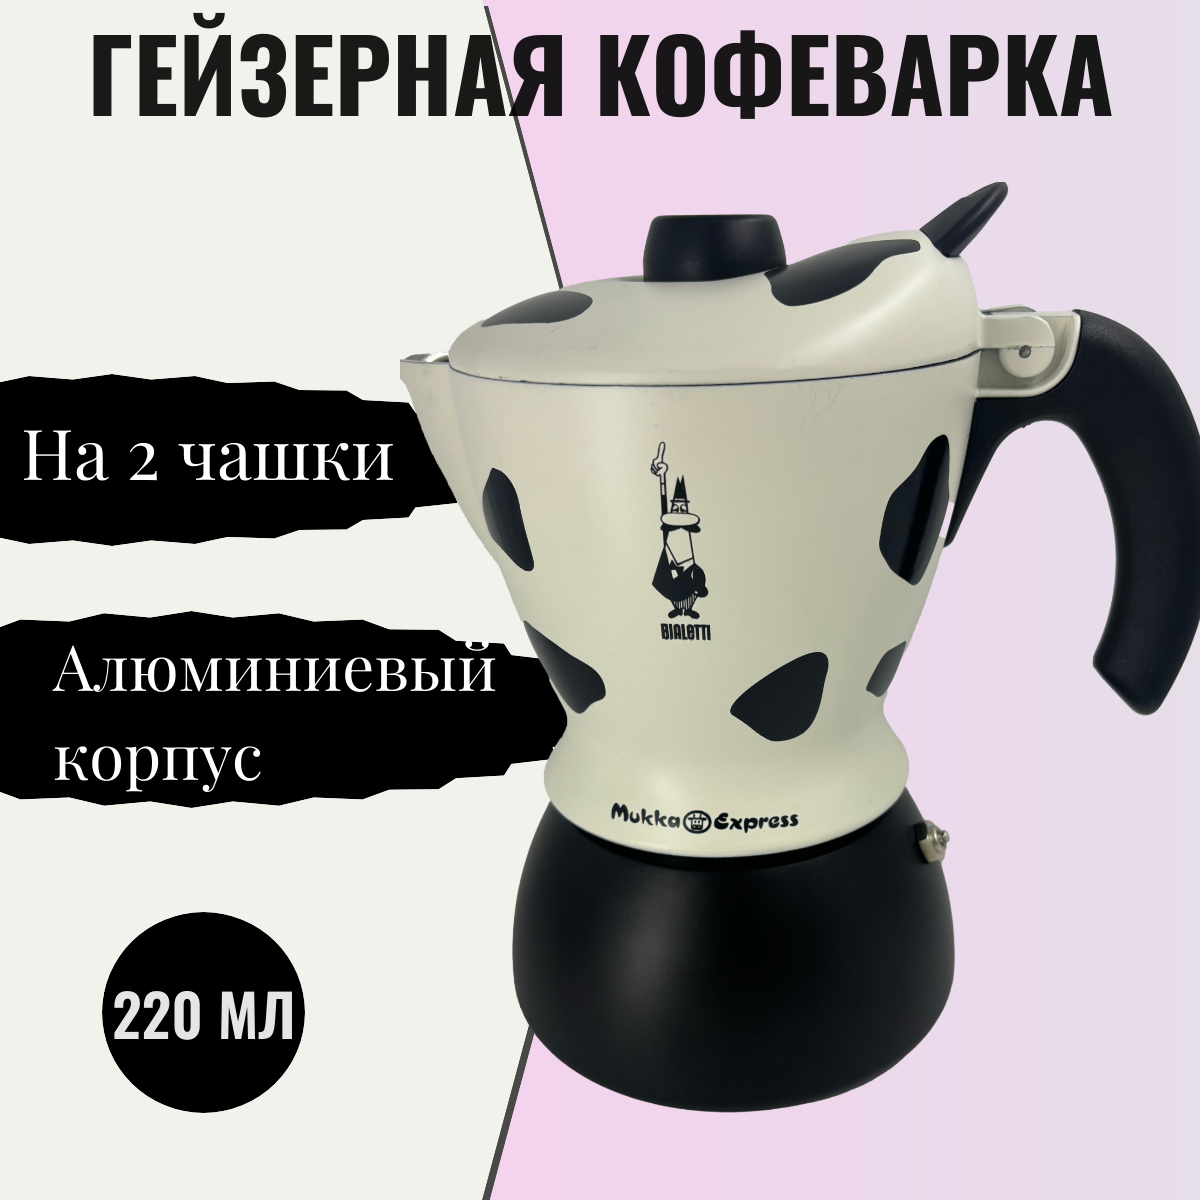 Кофеварка гейзерная Bialetti Mukka Express 3418 (2 чашки)